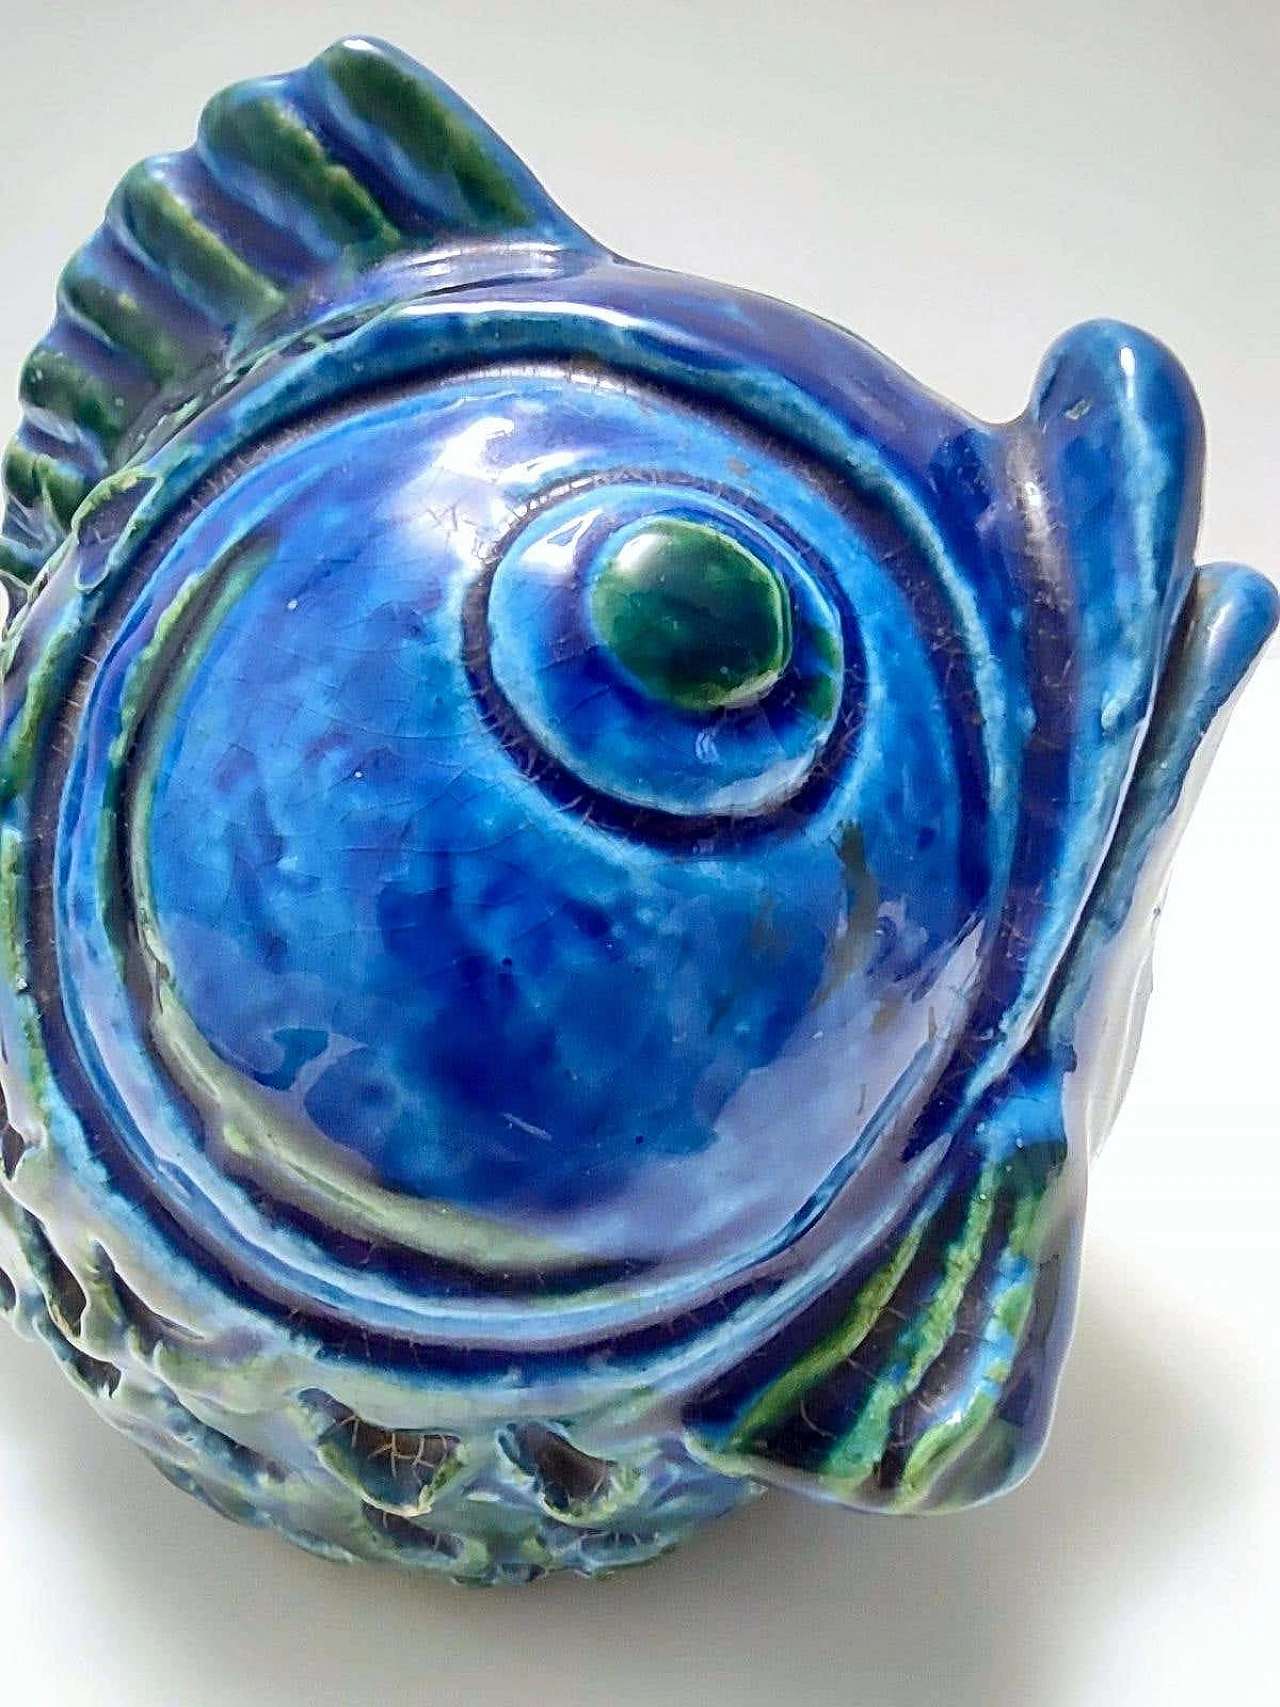 Salvadanaio in ceramica blu Rimini di Bitossi, anni '70 6